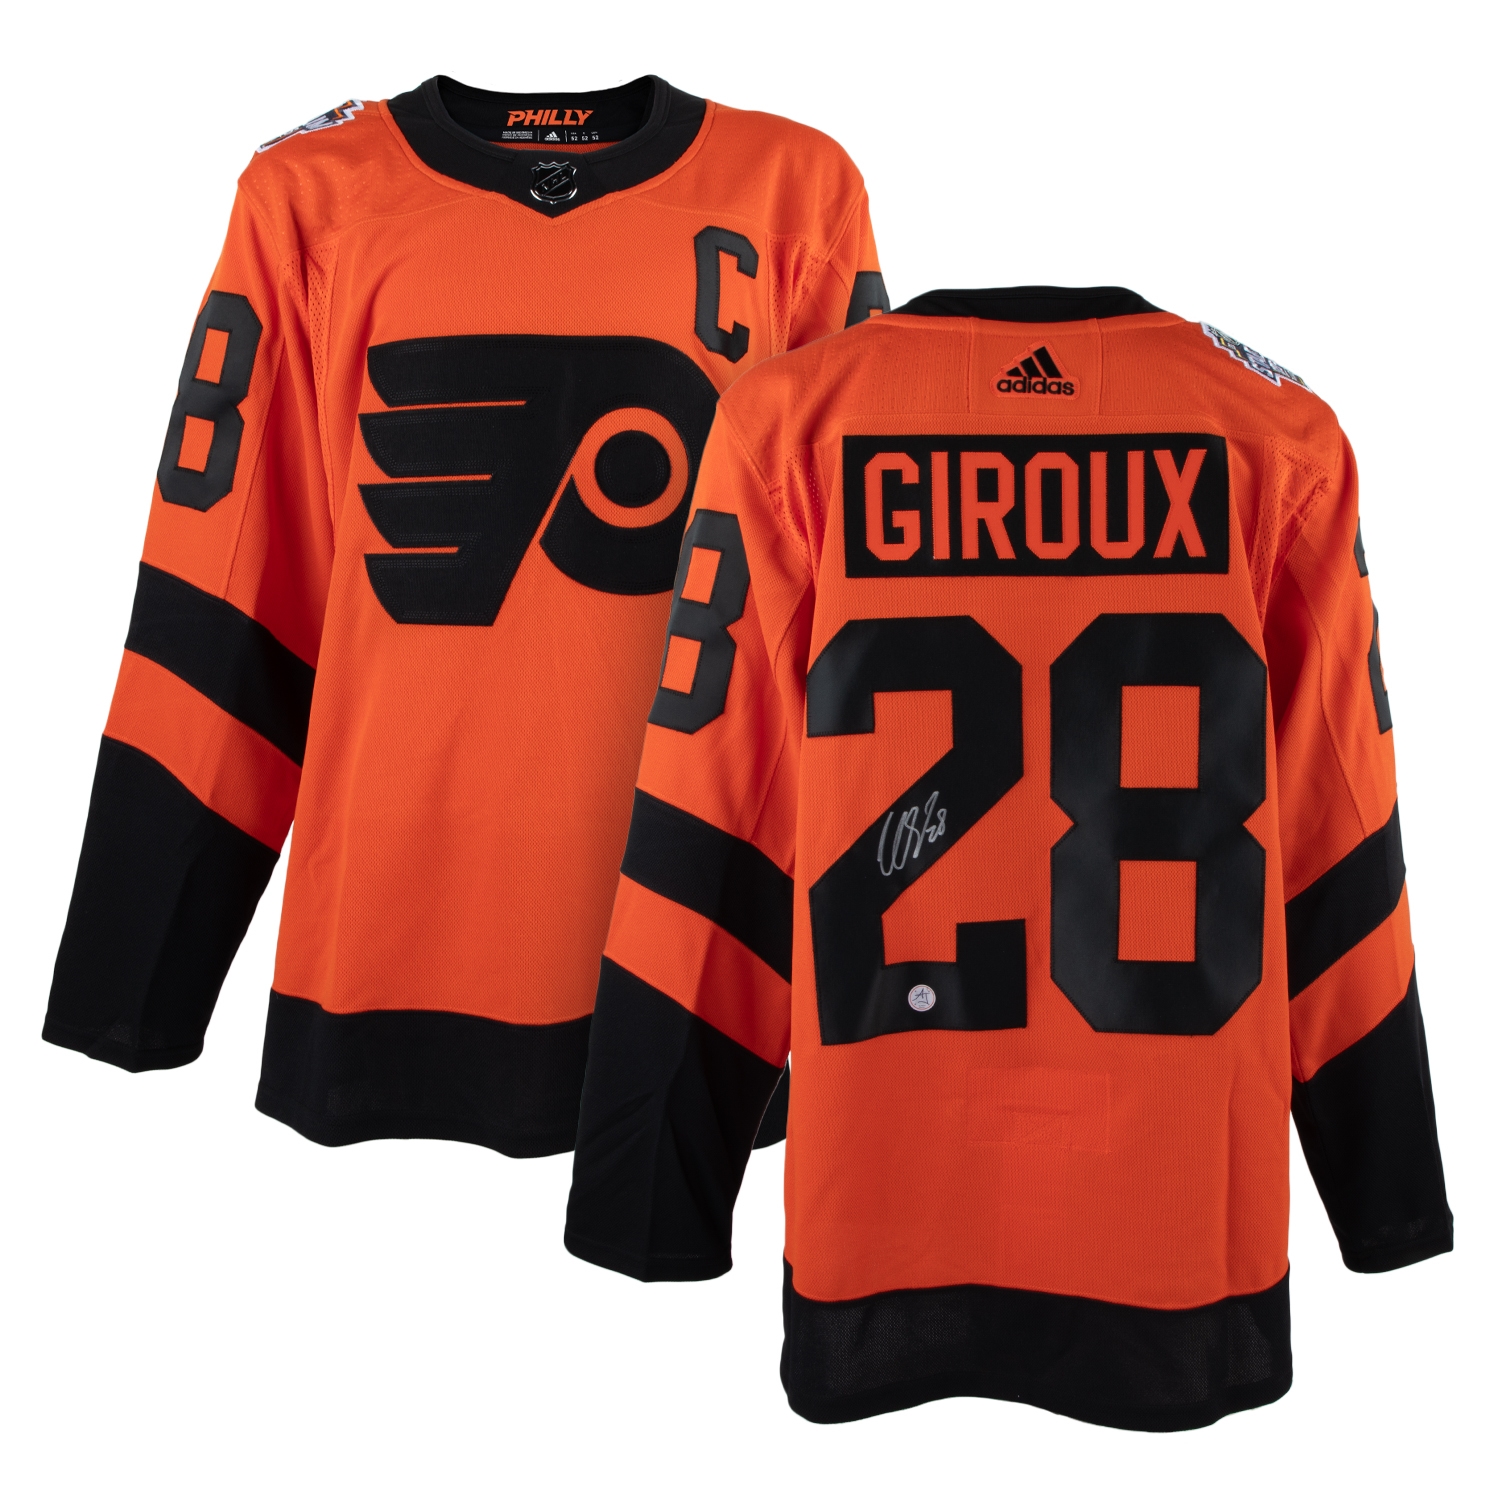 Claude Giroux Signed Philadelphia Flyers Stadium Series adidas Jersey